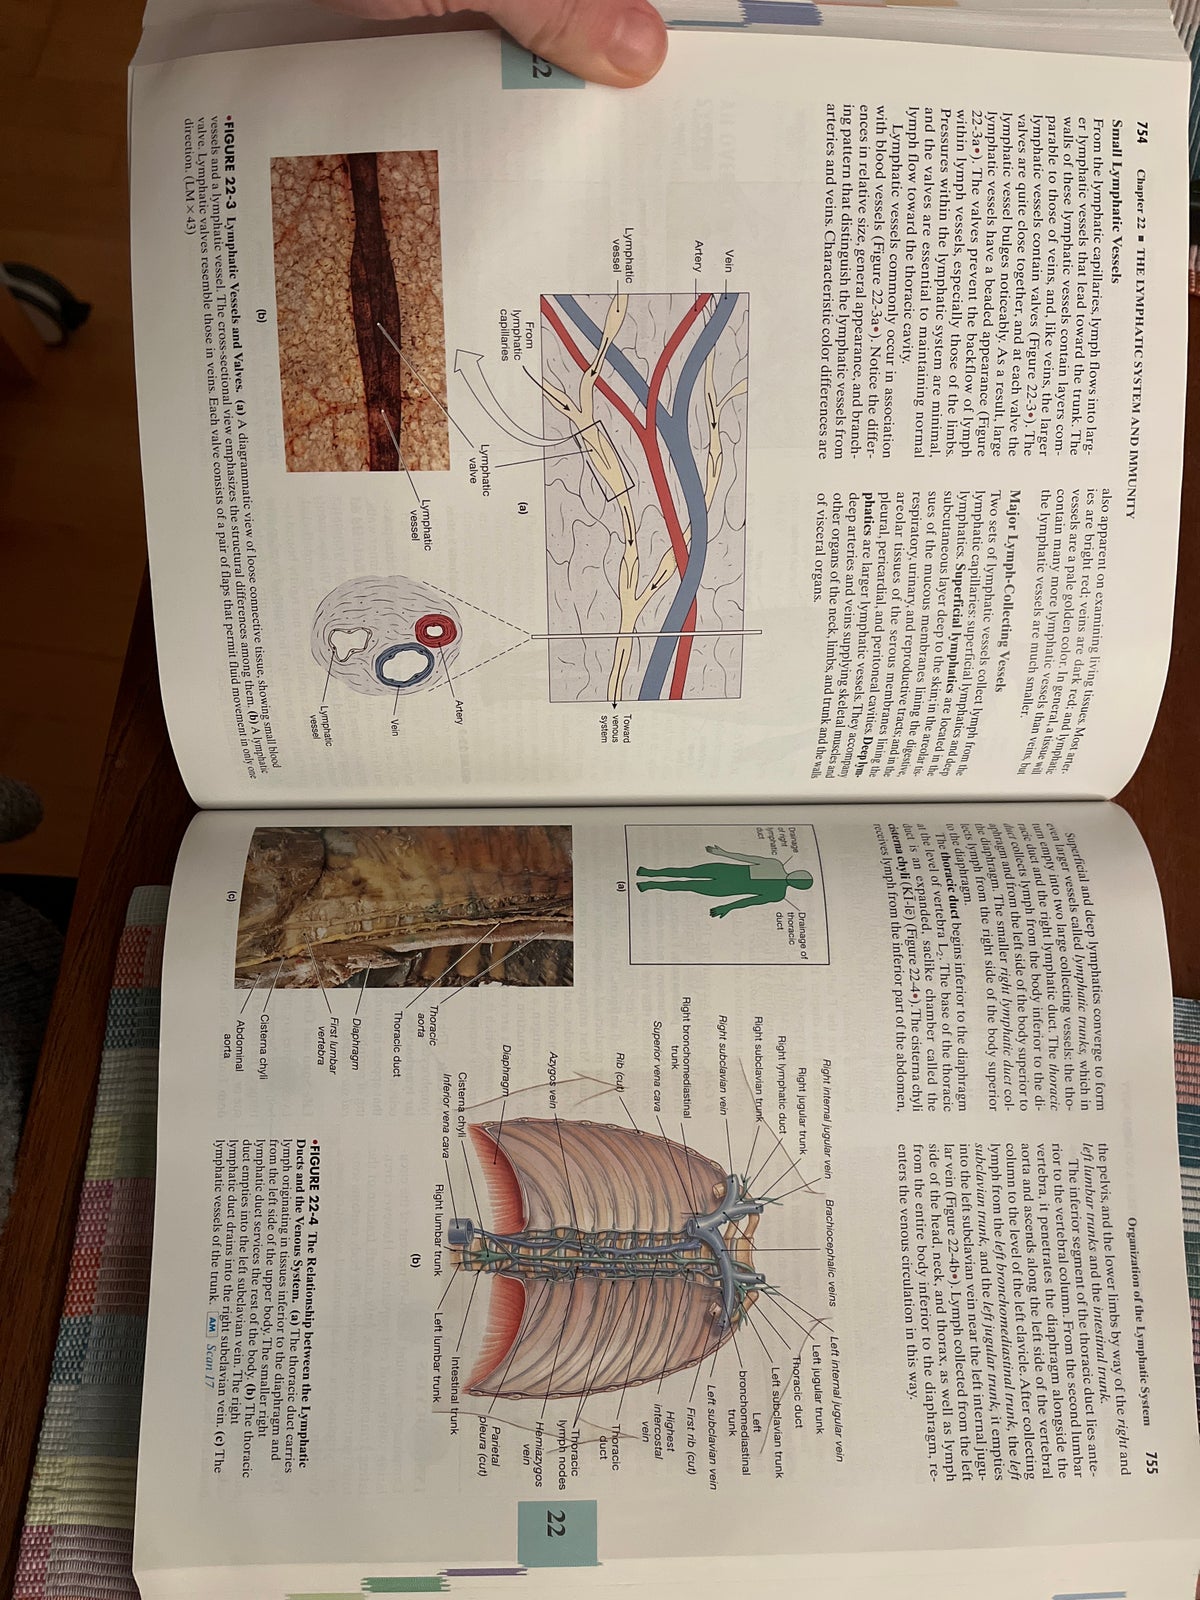 Anatomy and physiology, Martini